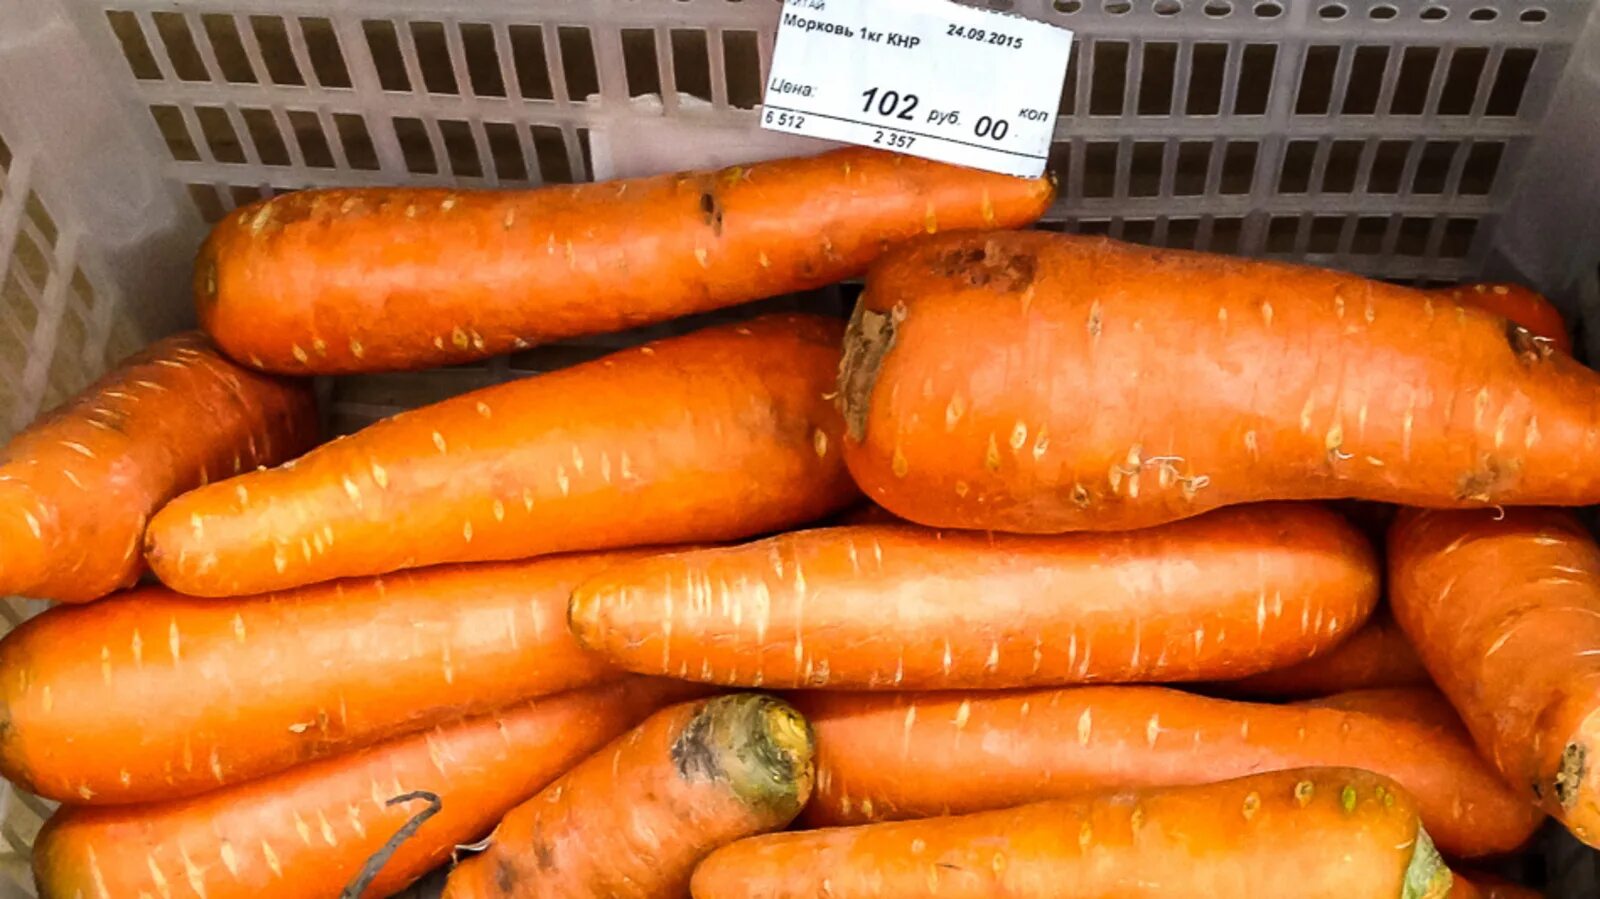 10 килограмм моркови. Морковь на рынке. Морковь кг. Килограмм моркови. Морковь импортная.